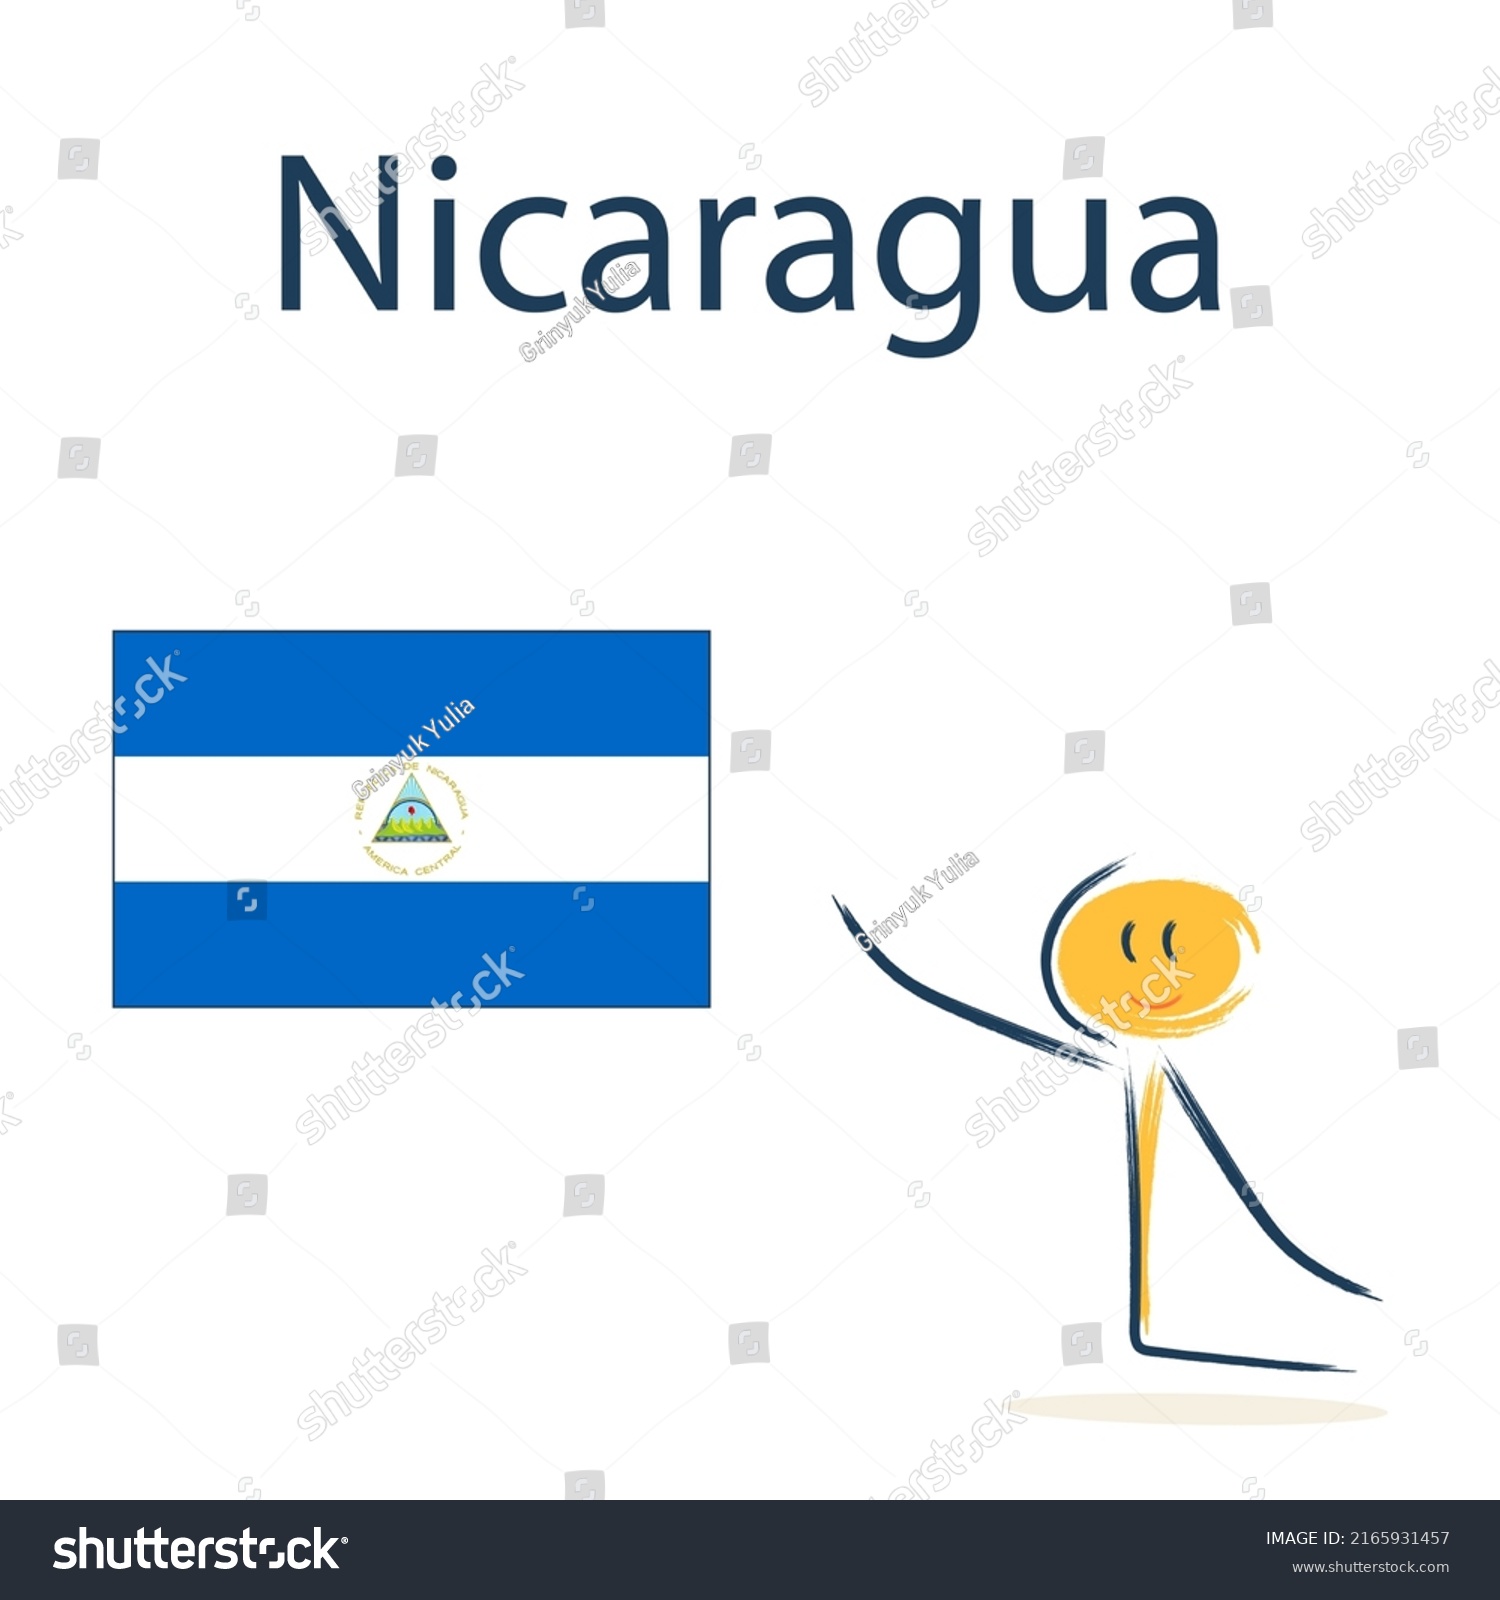 Nicaragua children over royalty